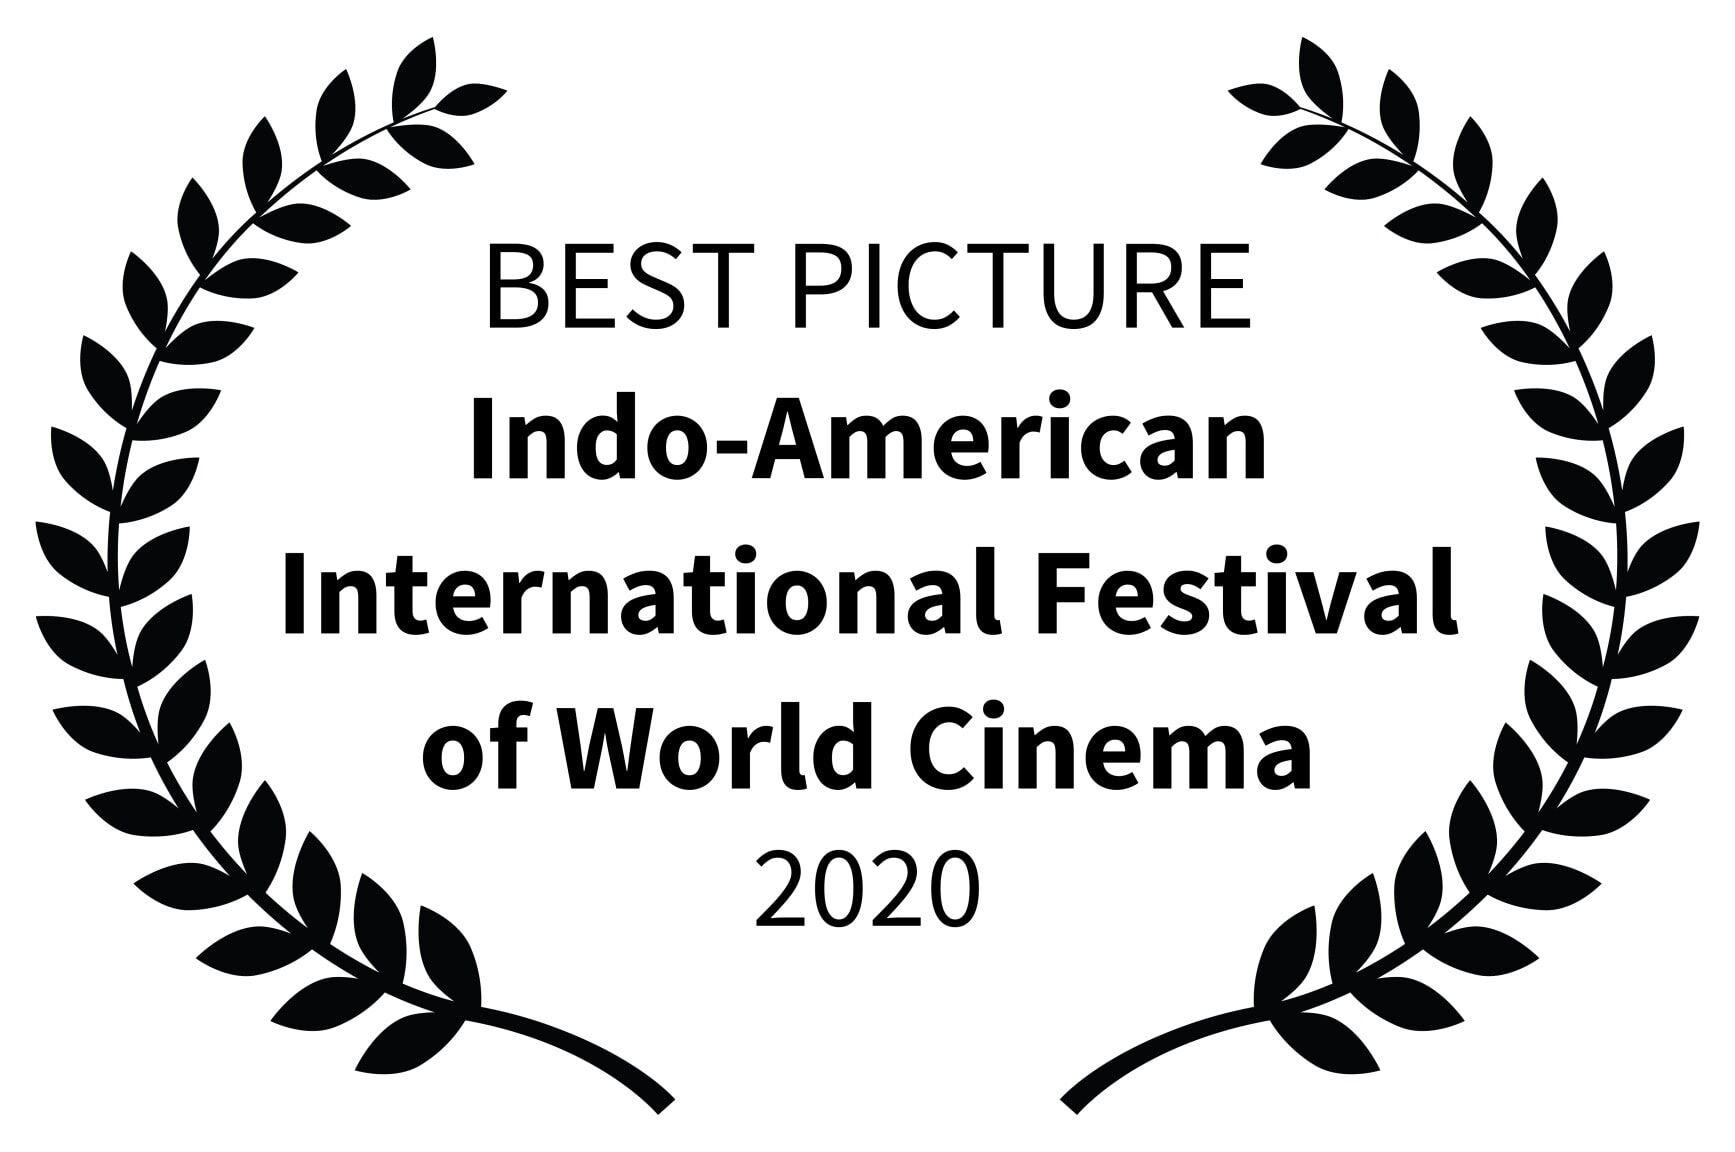 BEST PICTURE - Indo-American International Festival of World Cinema - 2020